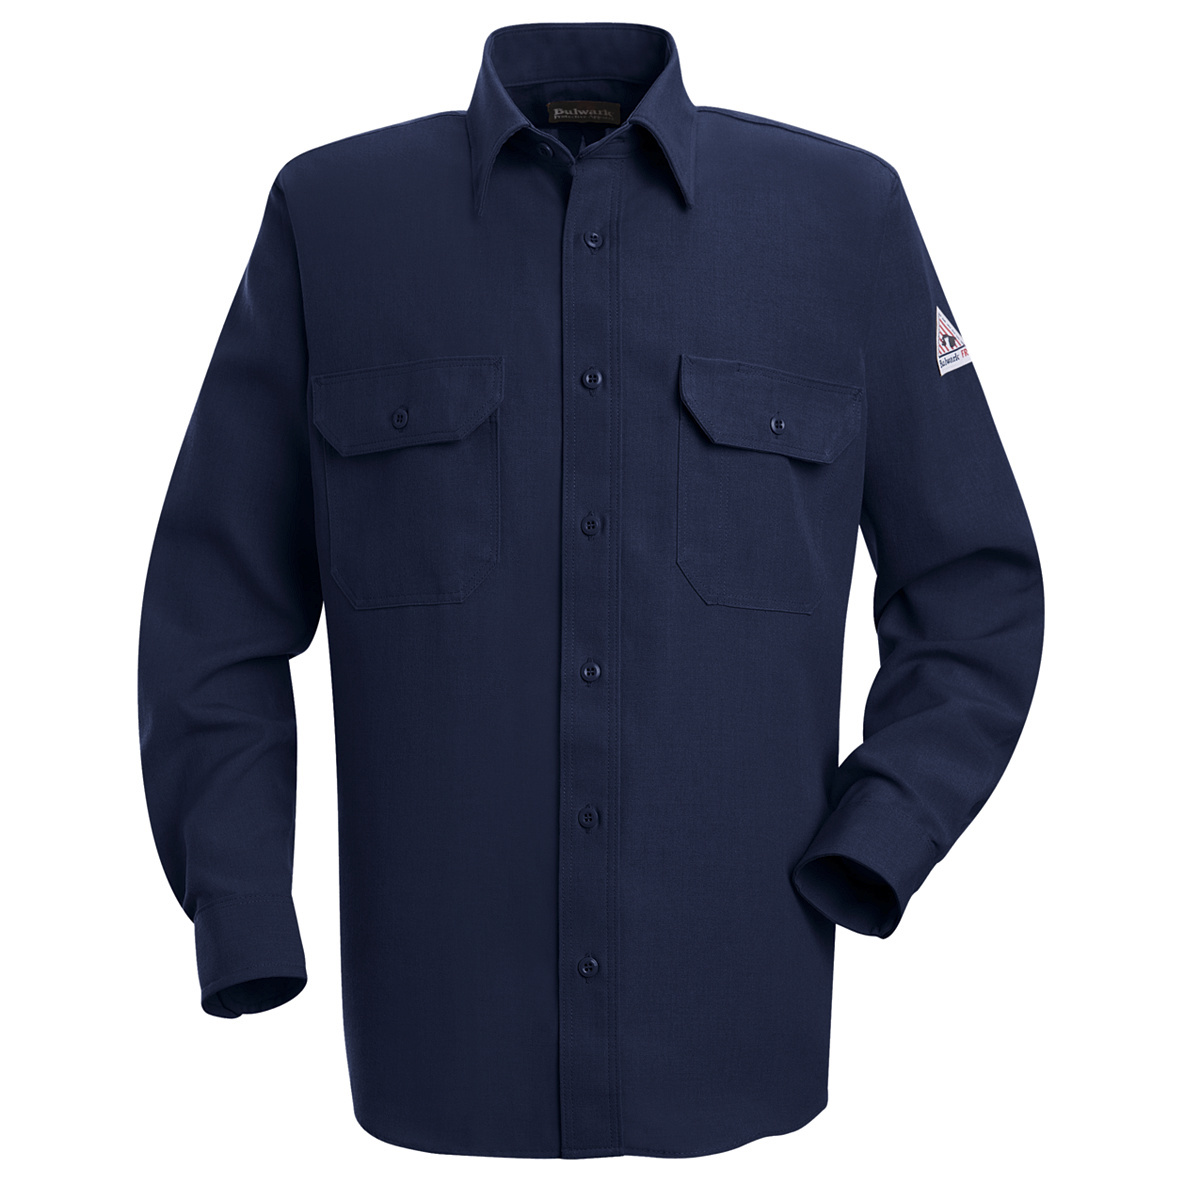 Bulwark® Large Regular Navy Blue Nomex® IIIA/Nomex® Aramid/Kevlar® Aramid Flame Resistant Uniform Shirt With Button Front Closur